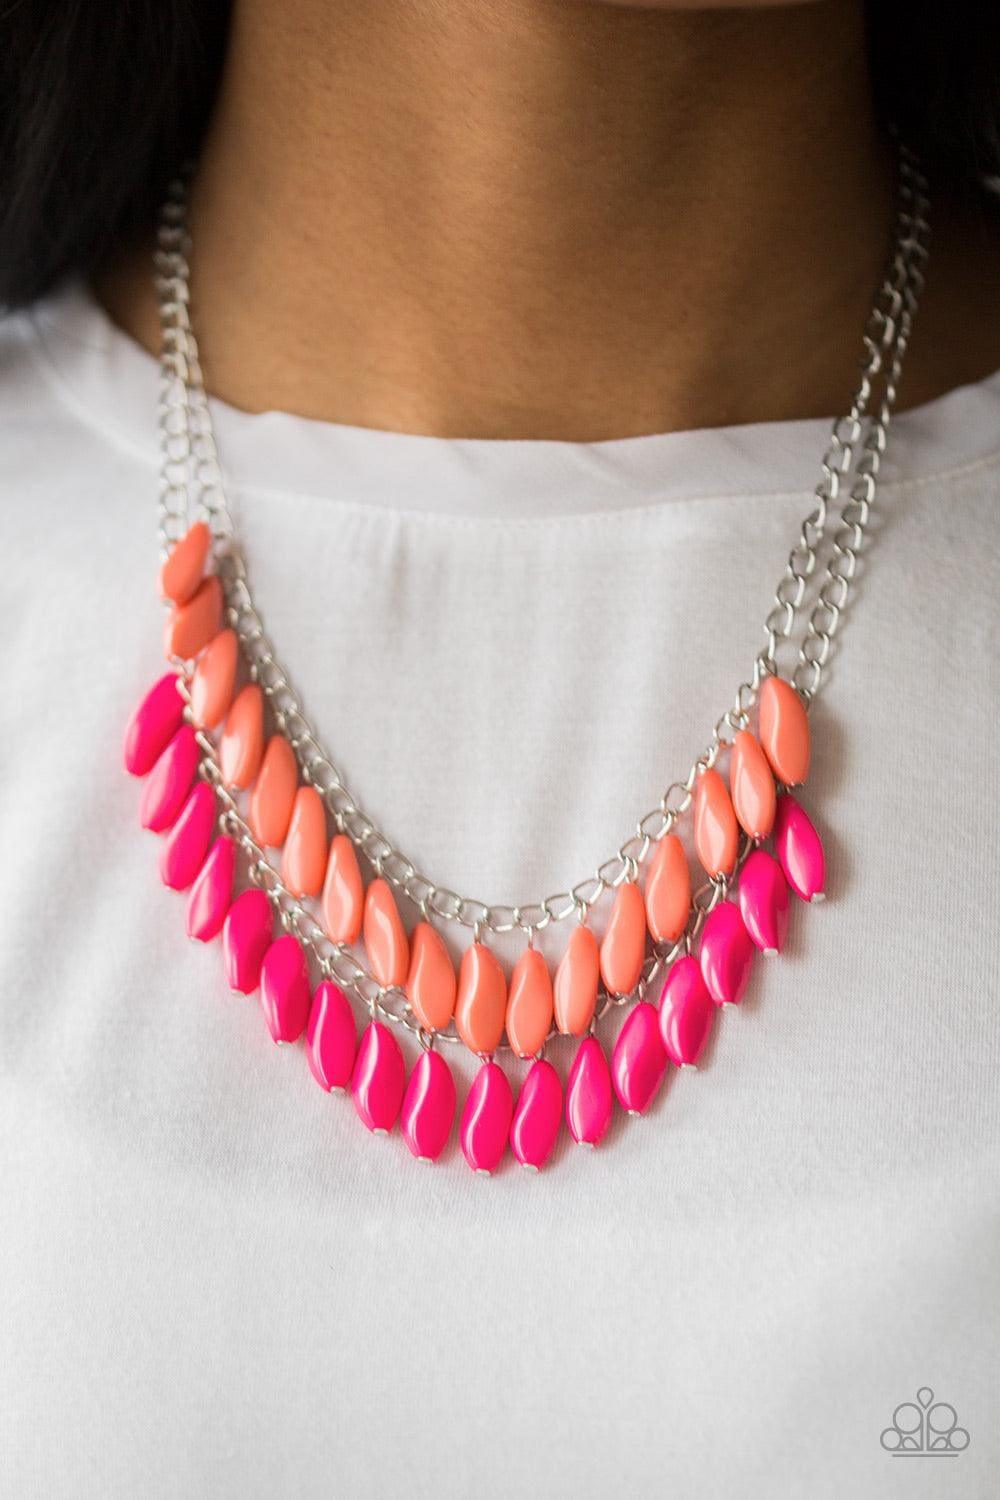 Paparazzi Accessories - Beaded Boardwalk - Pink Necklace - Bling by JessieK